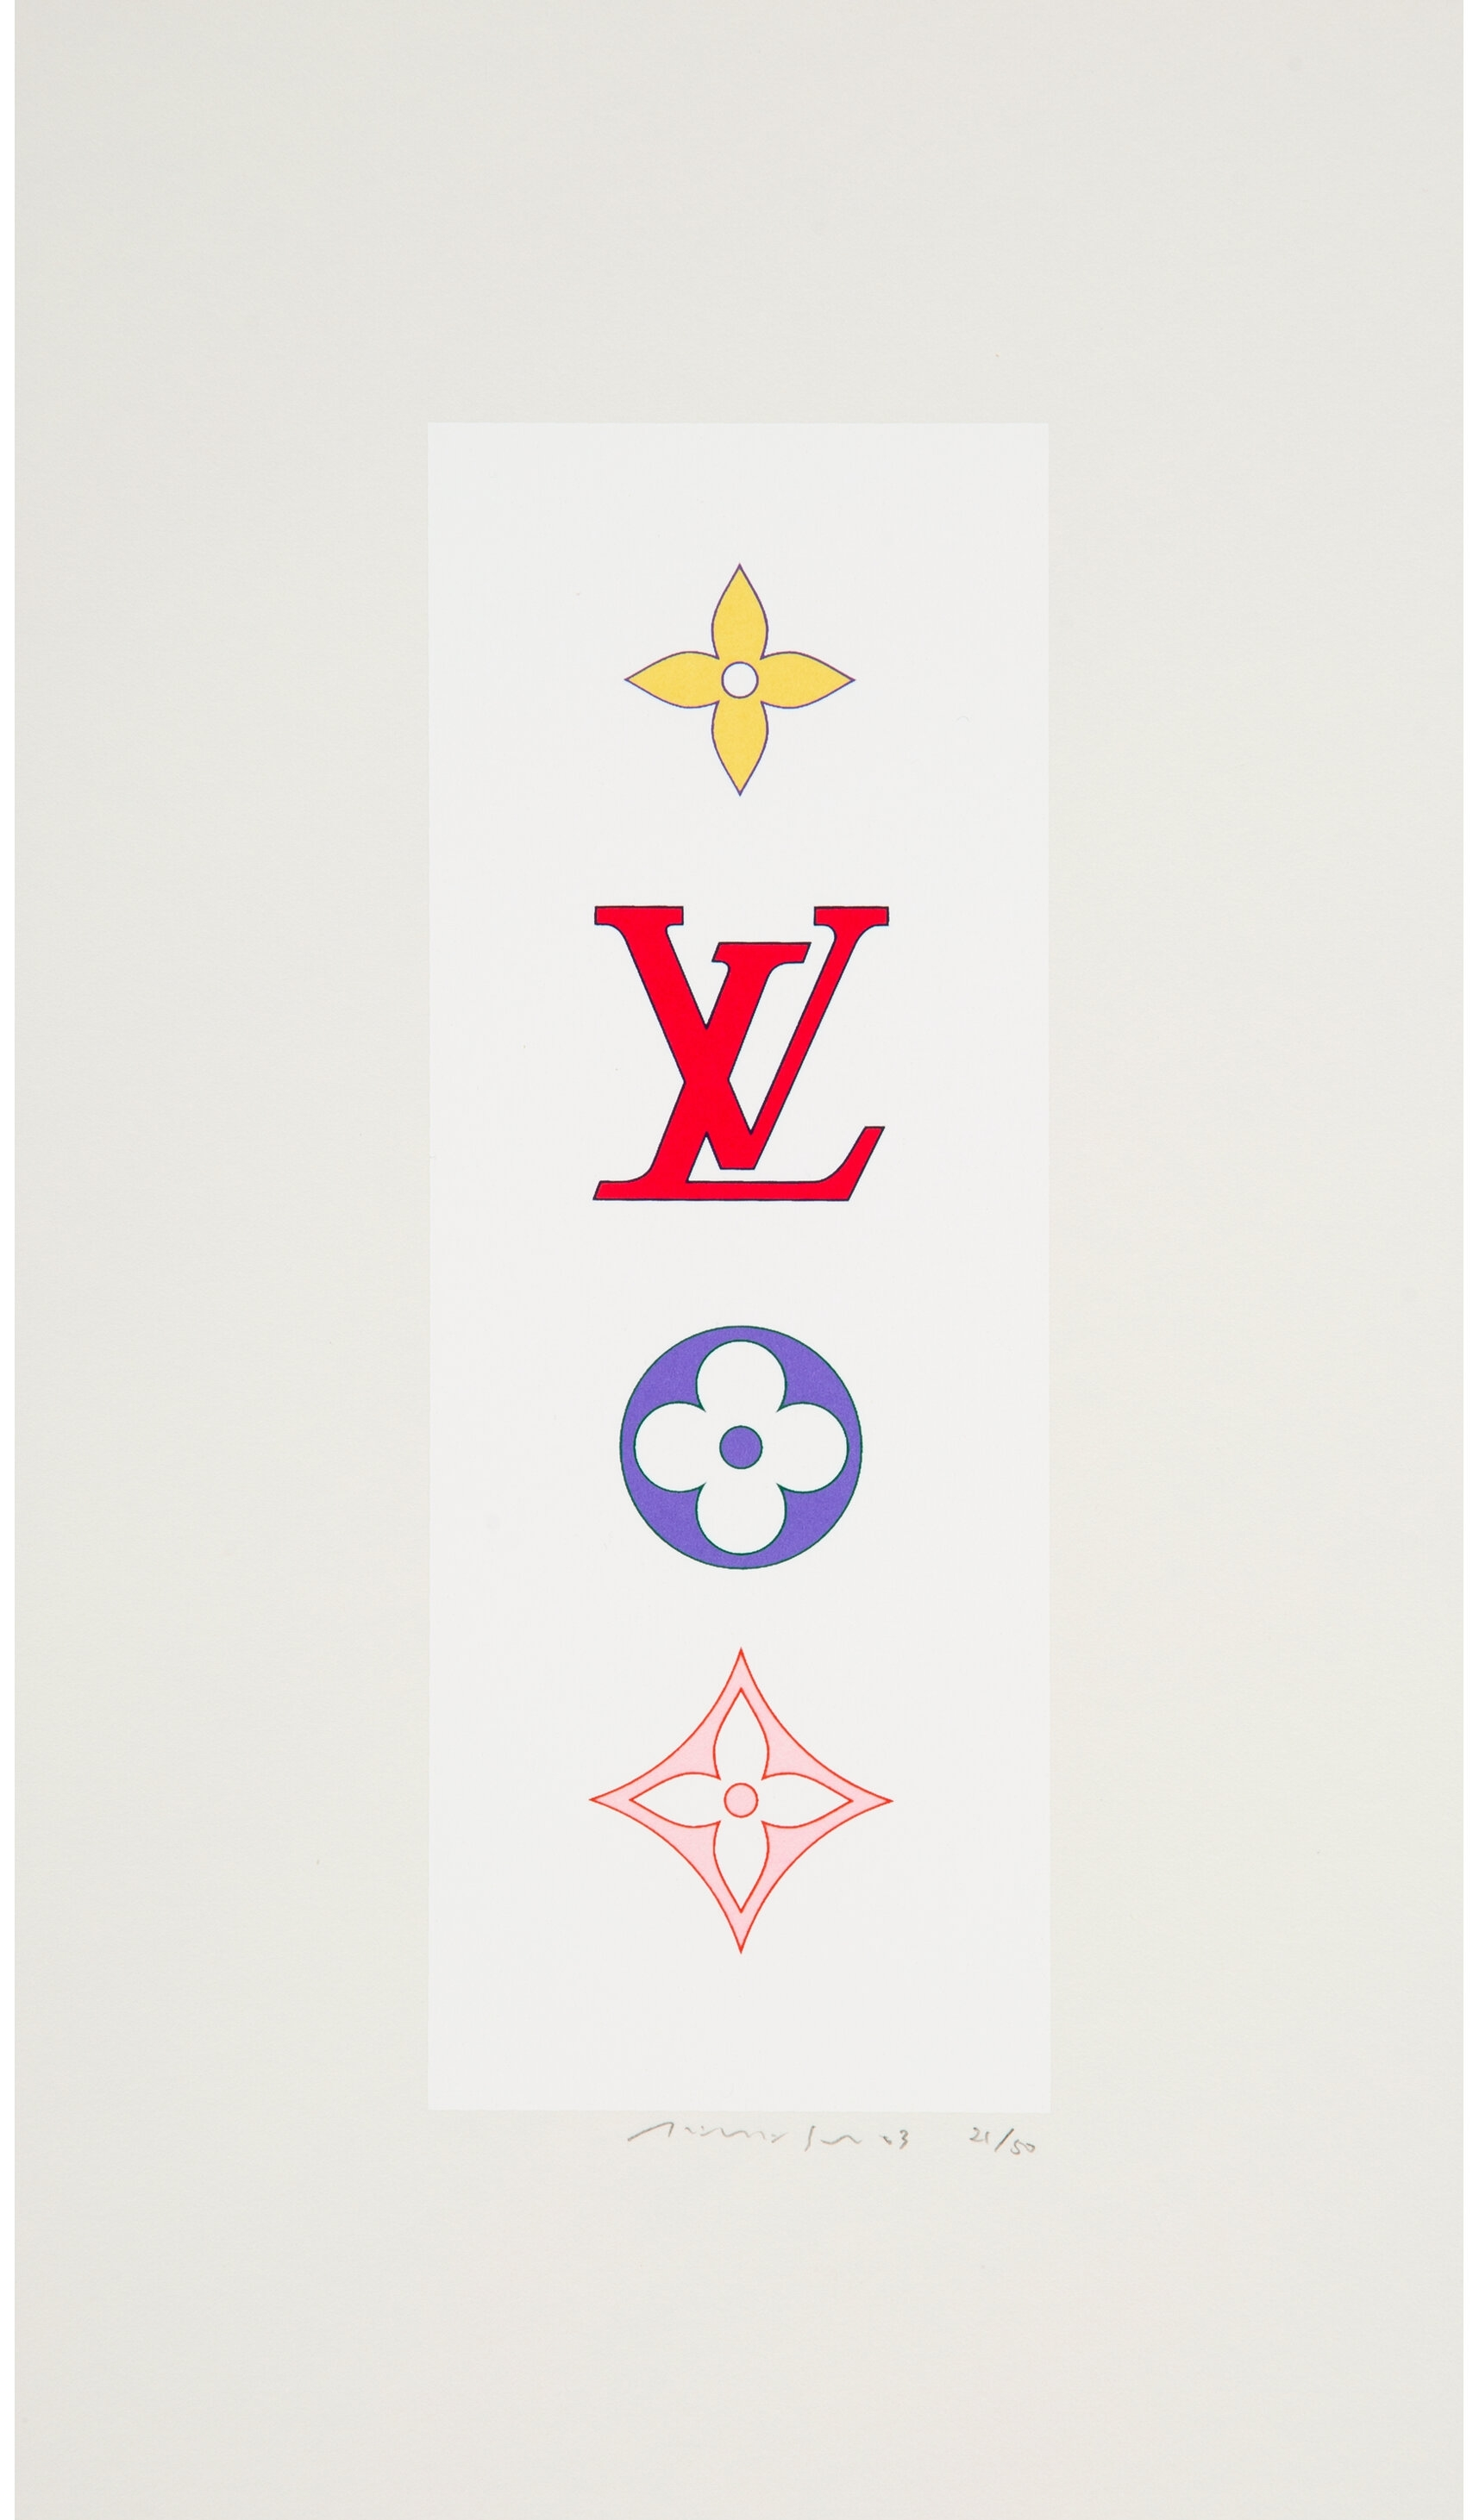 Murakami Louis Vuitton Monogram Screenprint sold at auction on 6th December